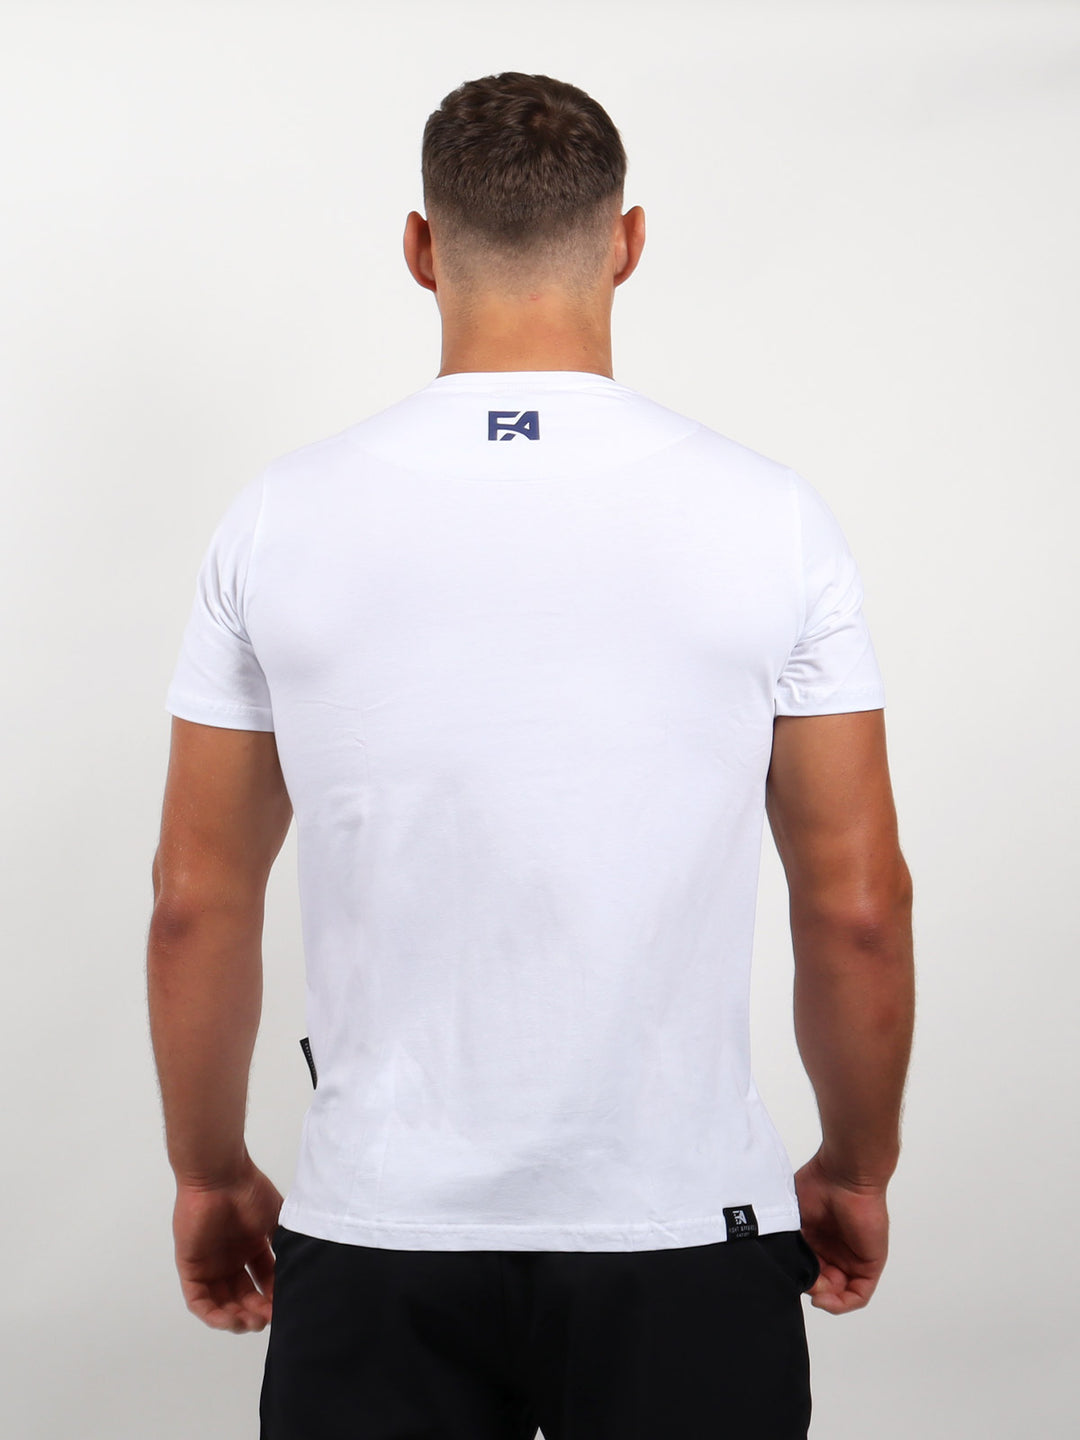 FA - USA Edition - V3.0 Shirt